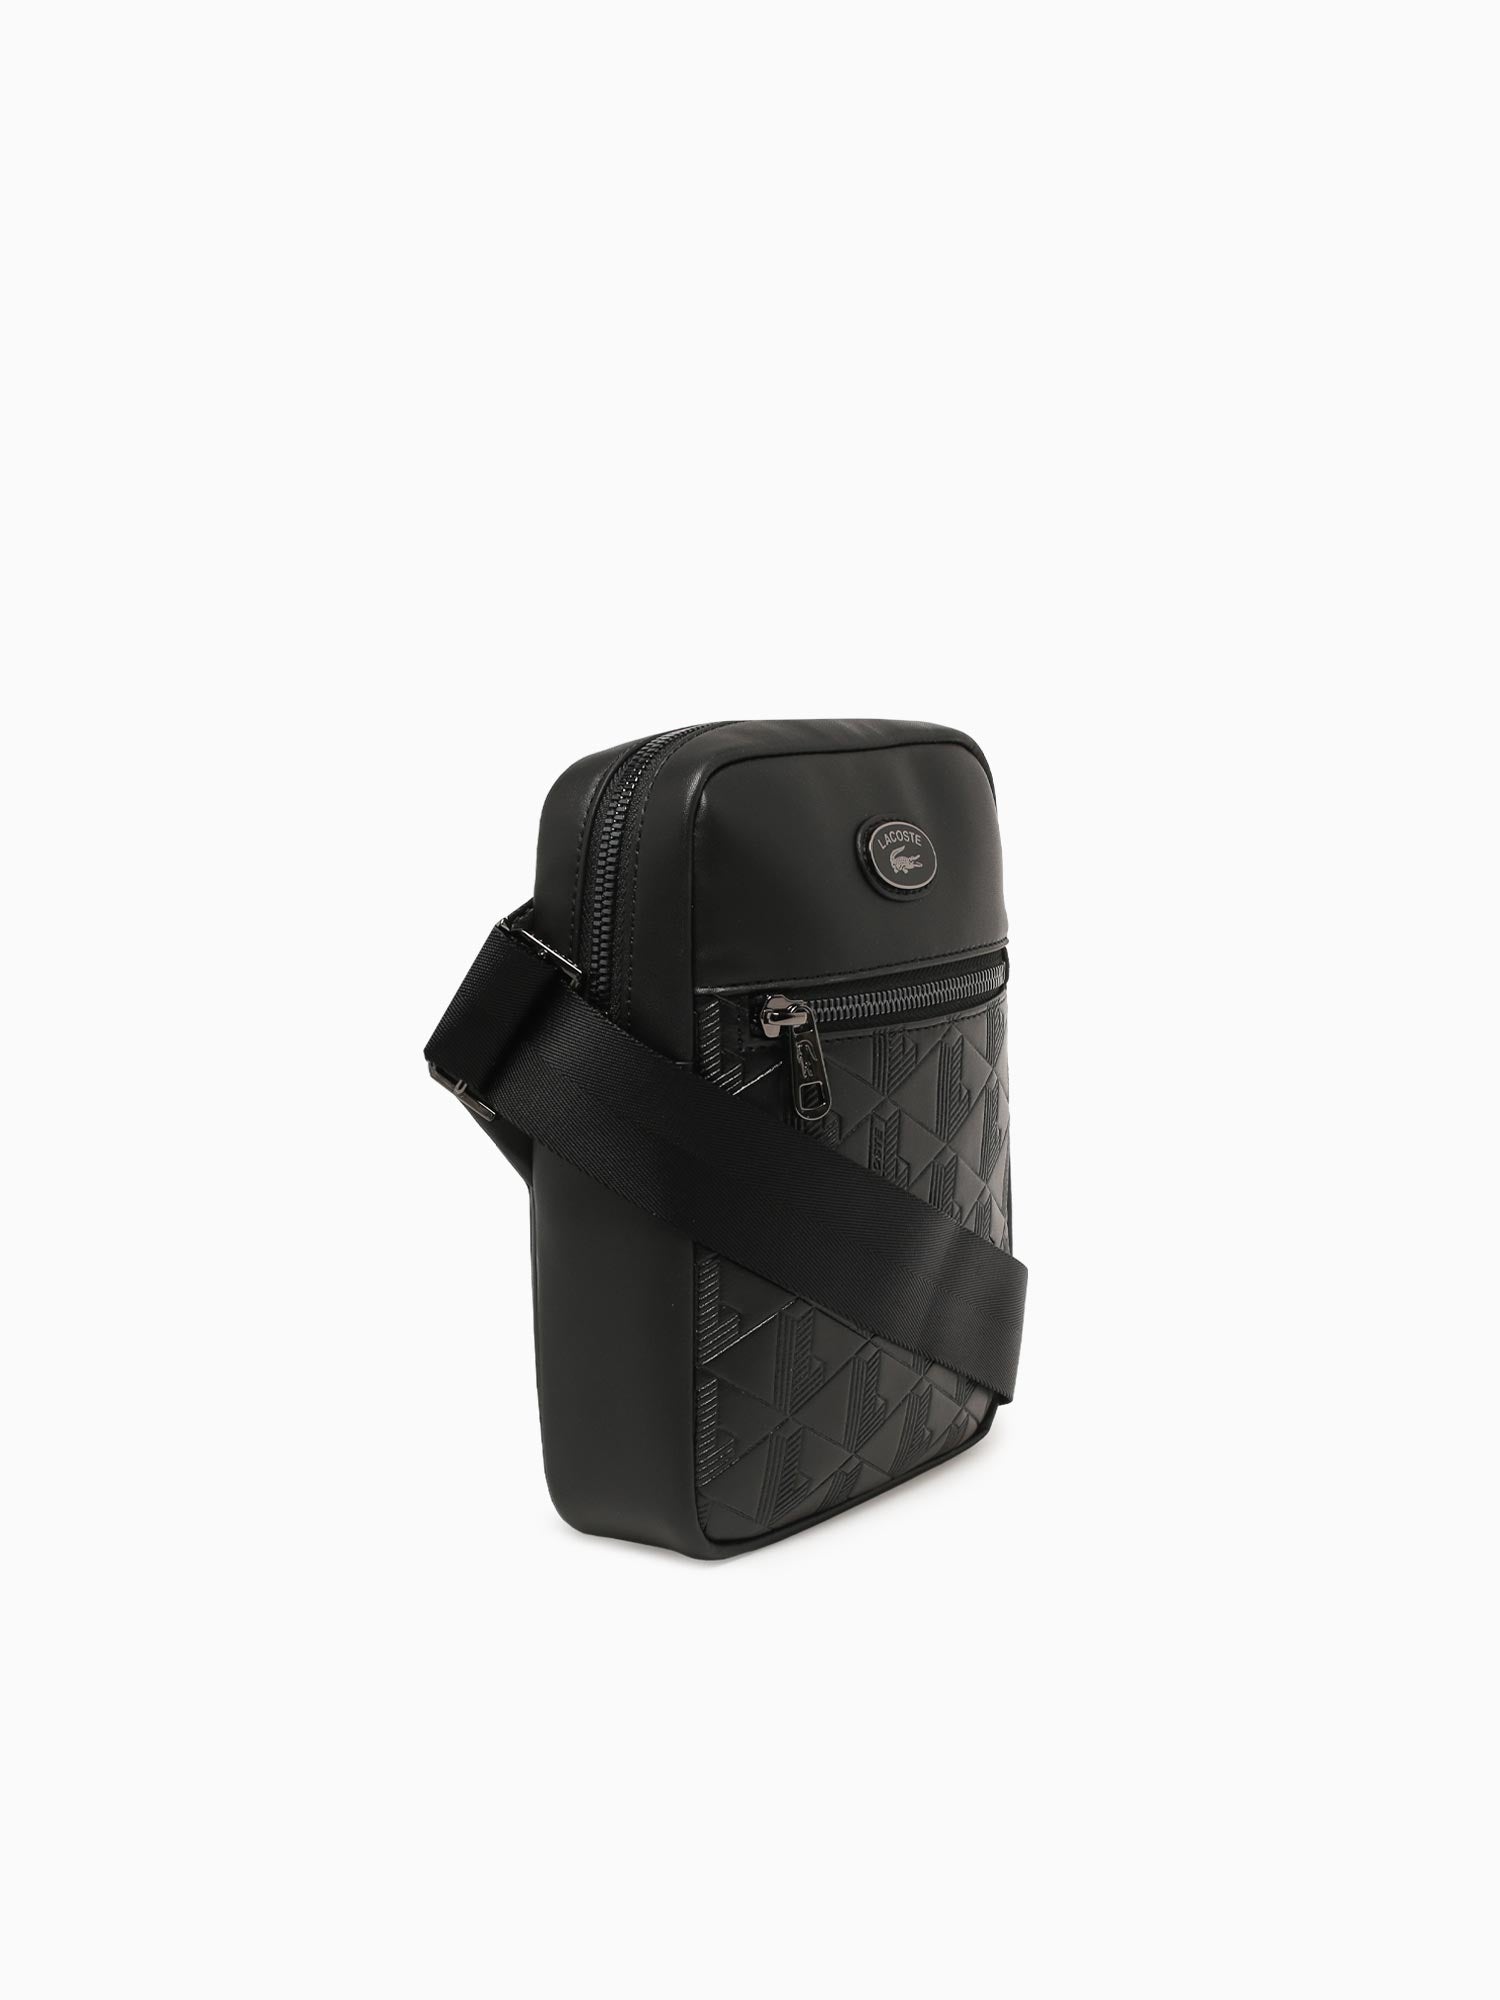 Crossover Bag 000 Noir Black